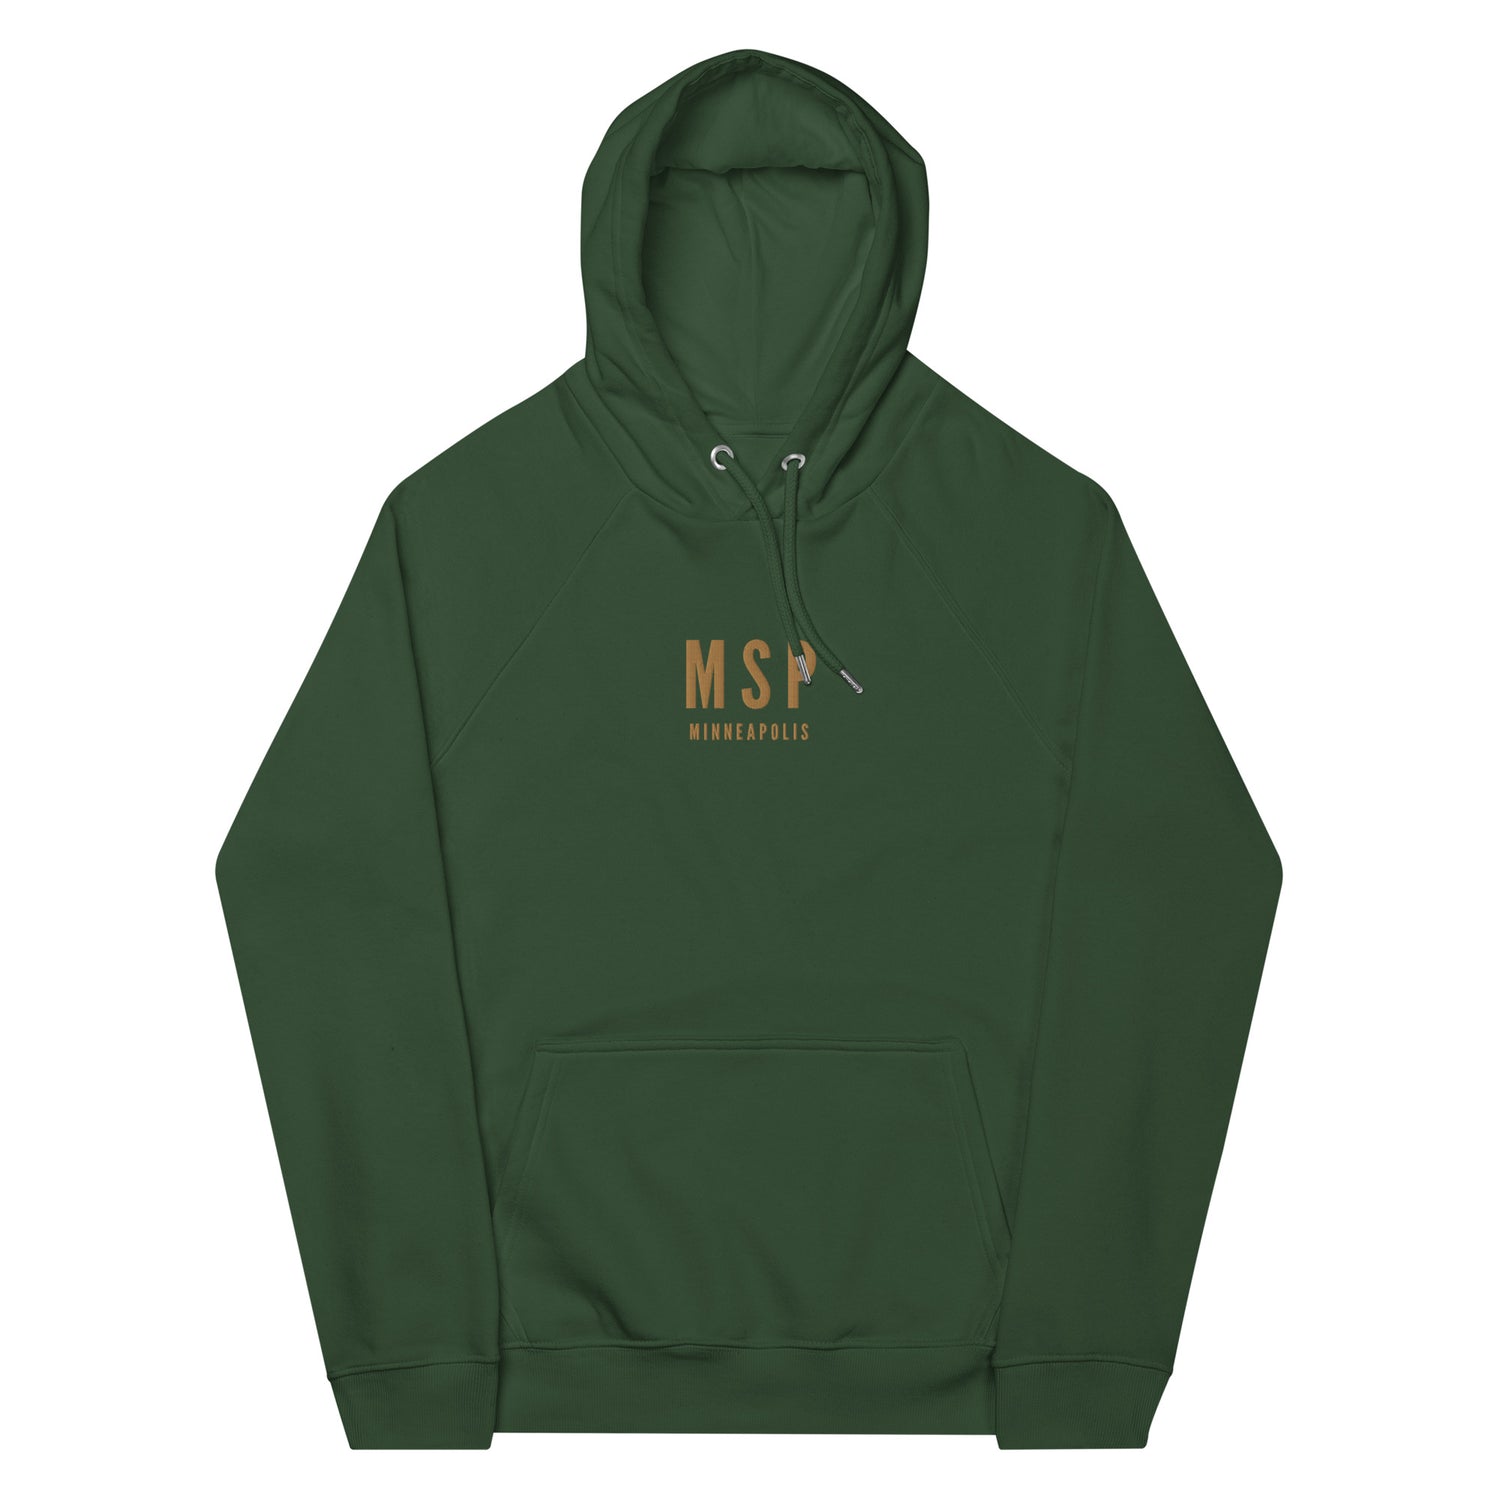 Minneapolis Minnesota Hoodies and Sweatshirts • MSP Airport Code